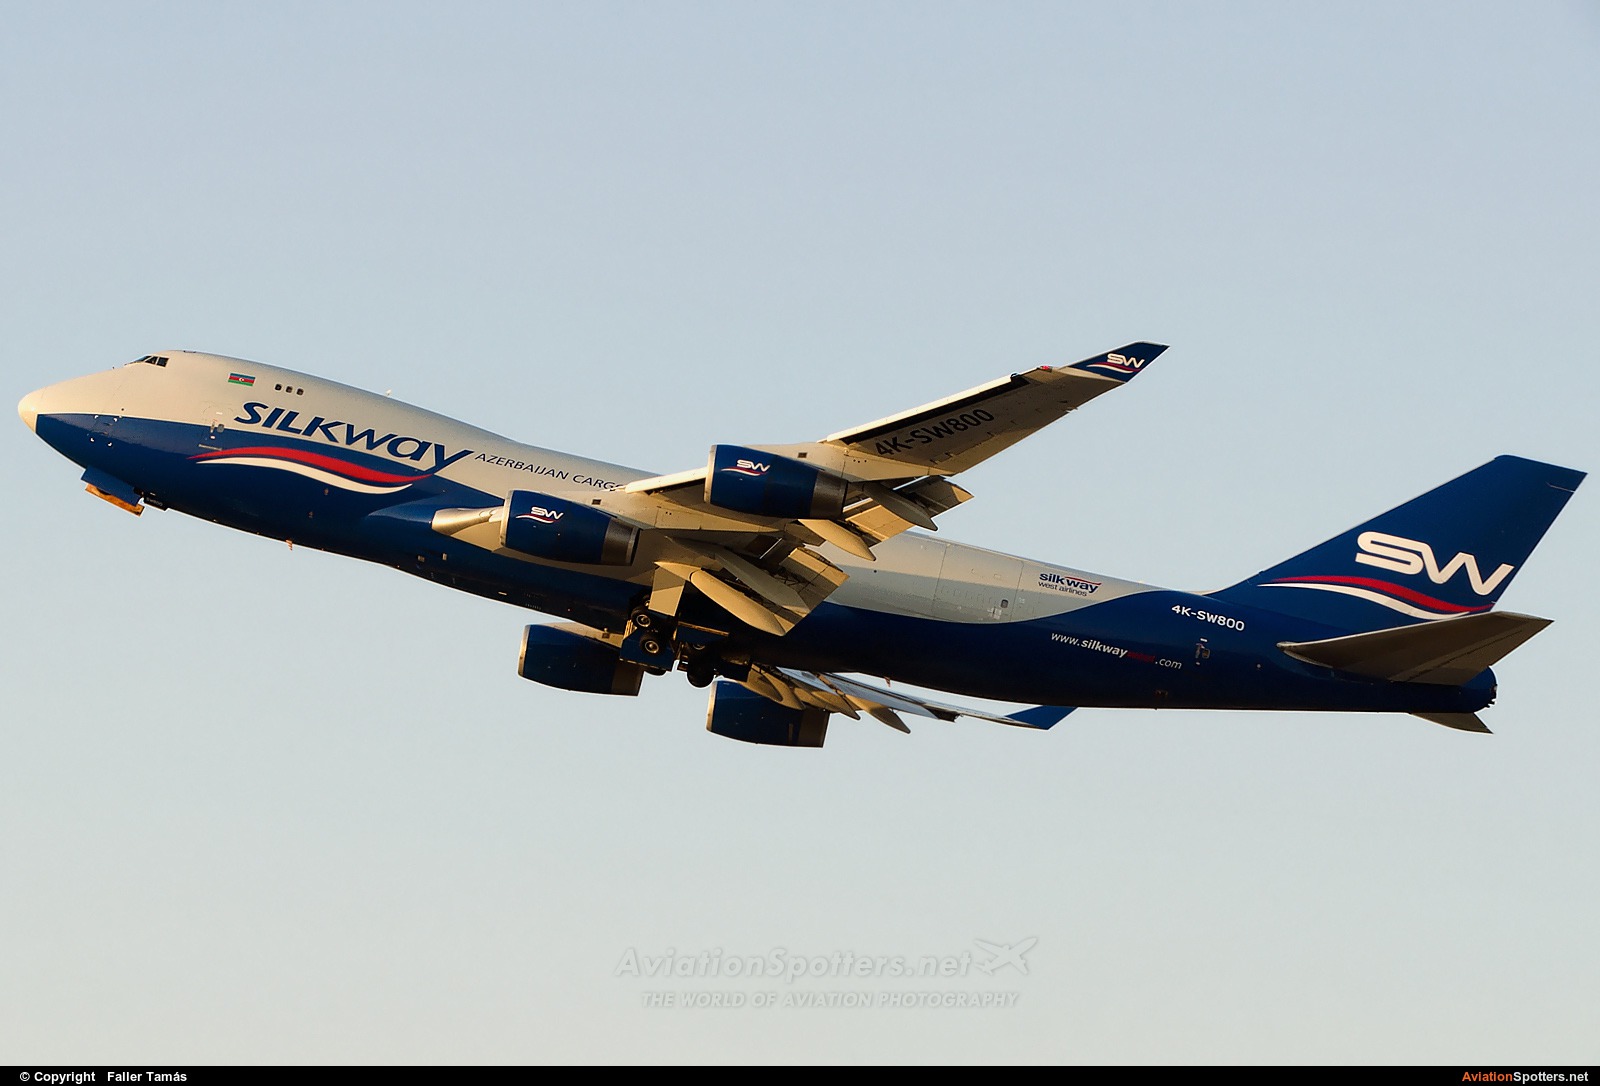 Silk Way Airlines  -  747-400F  (4K-SW800) By Faller Tamás (fallto78)